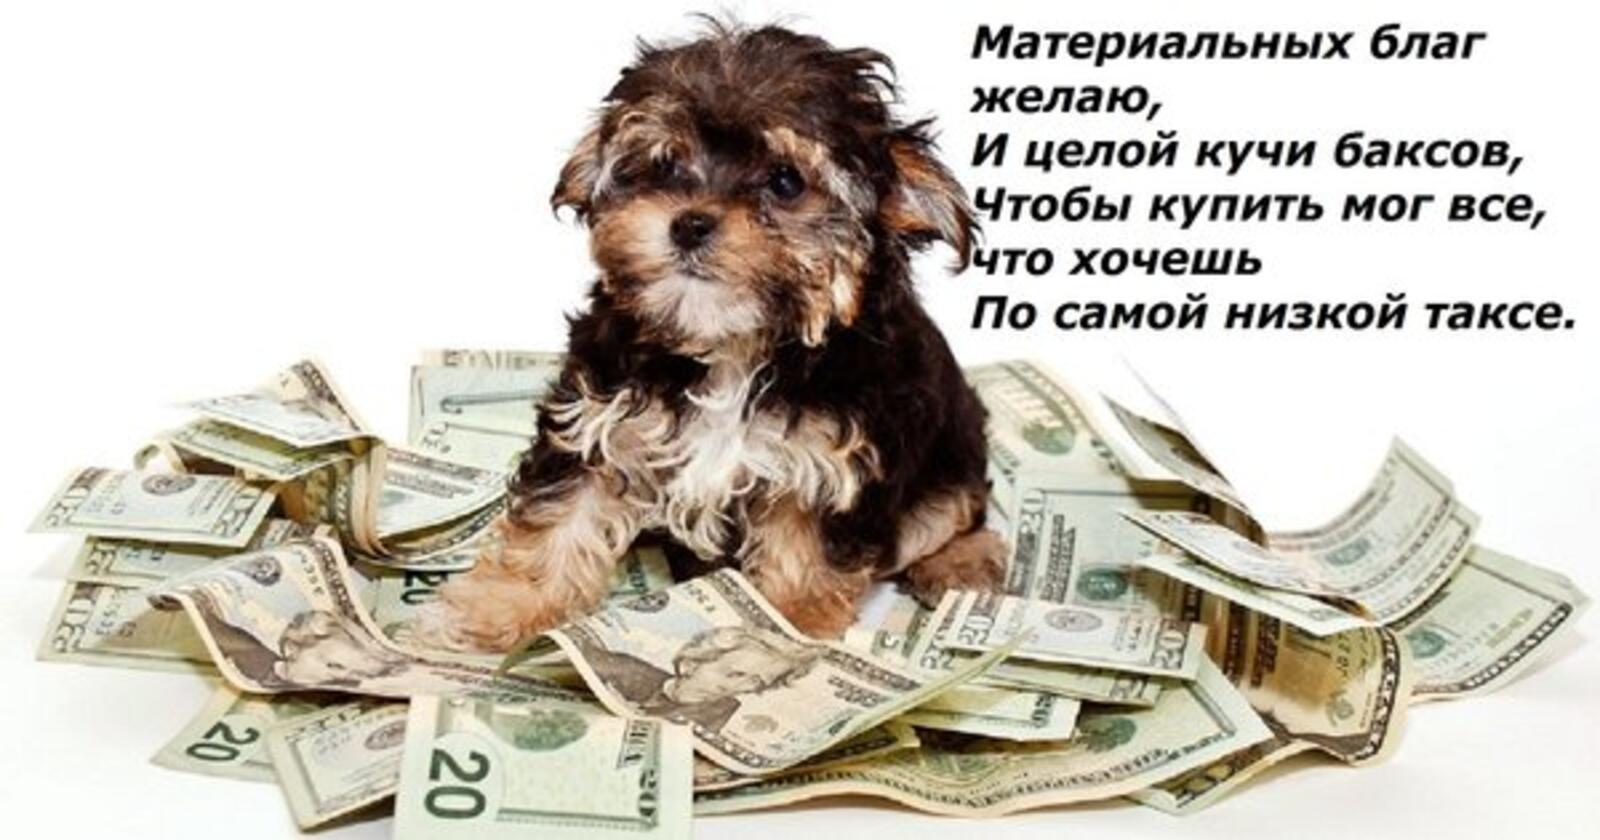 Puppy`s sitting on the money